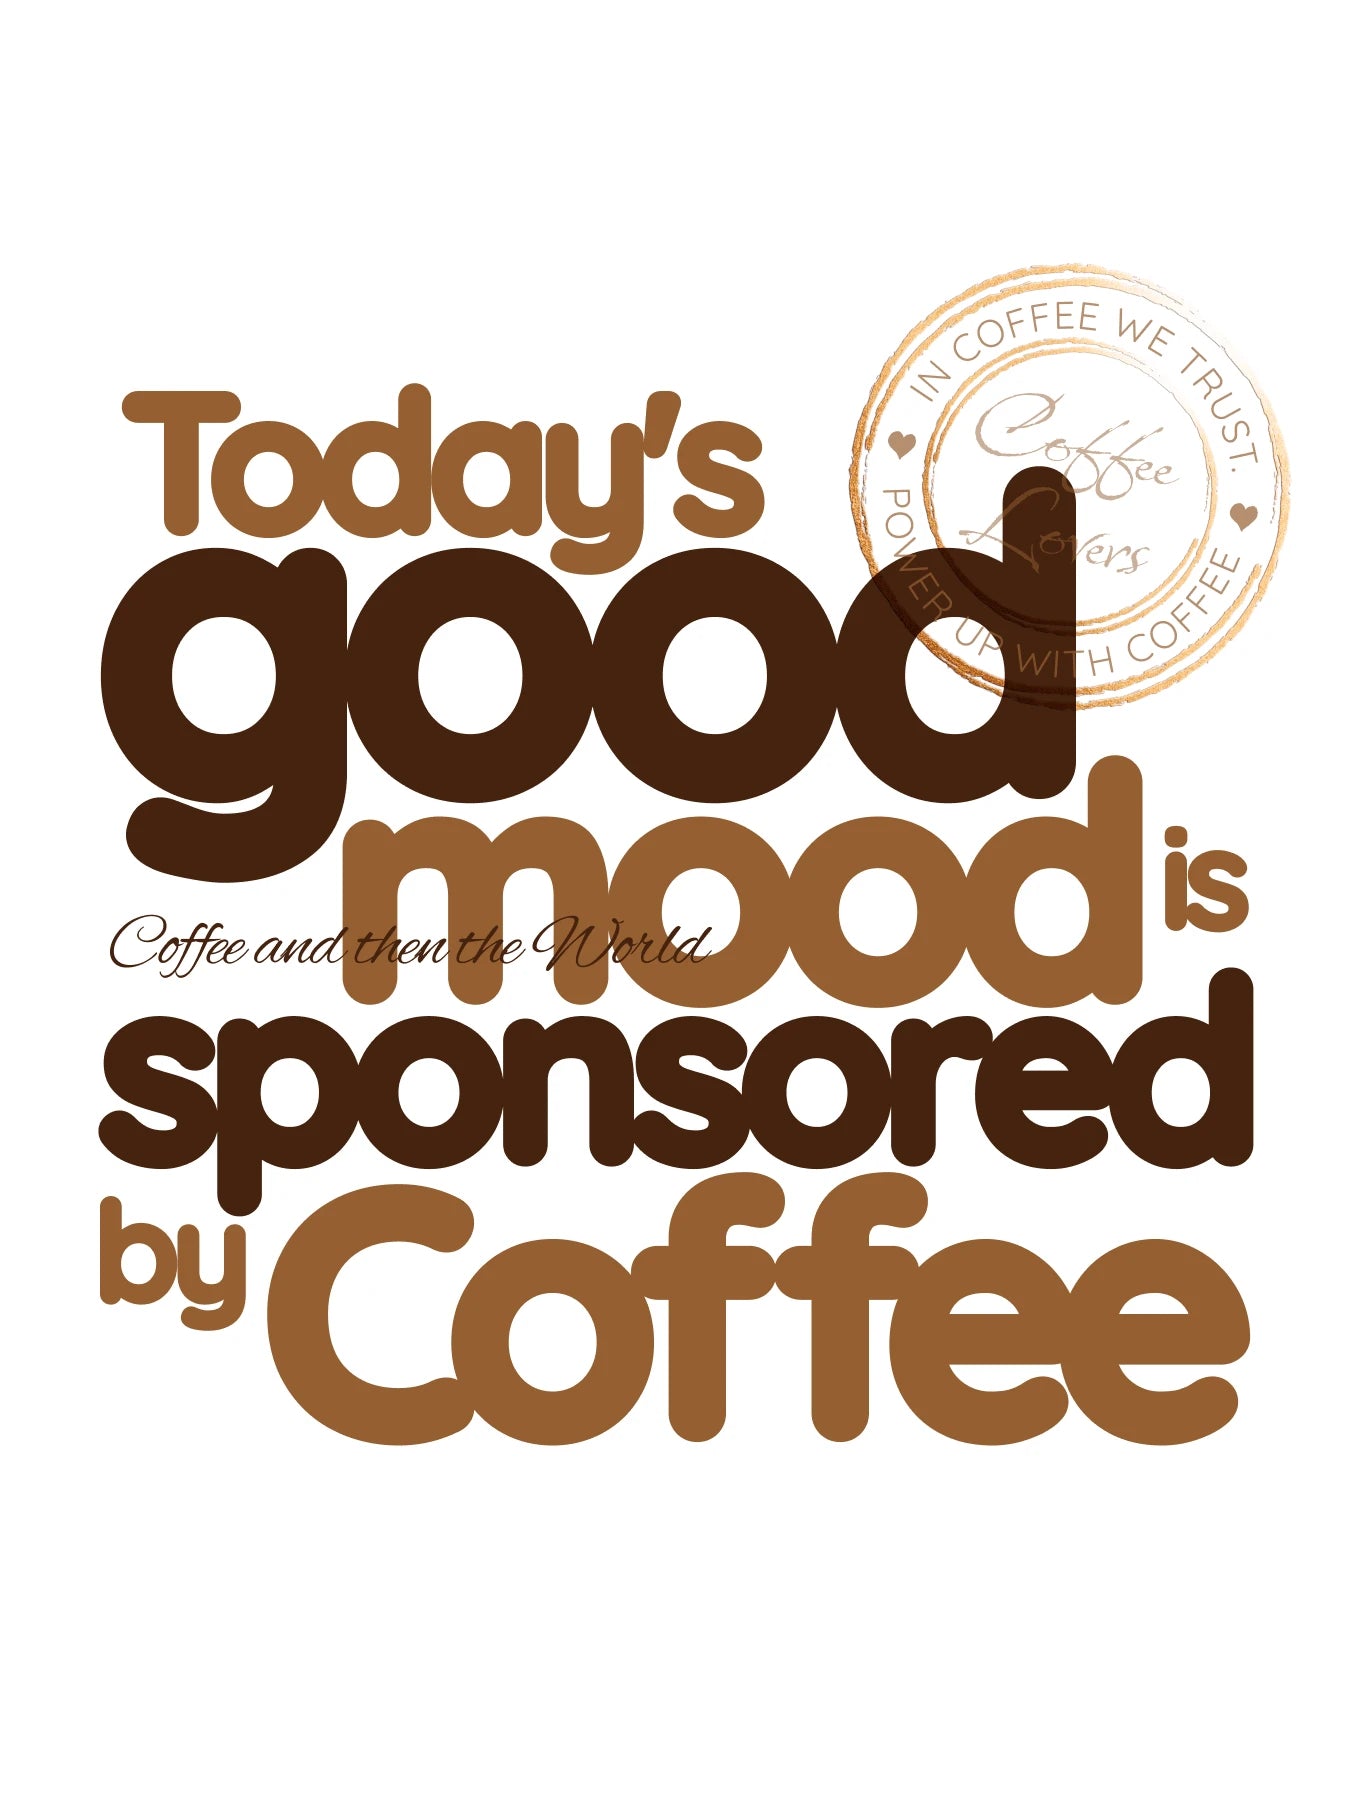 Good Mood With Coffee - Minimalist Typography